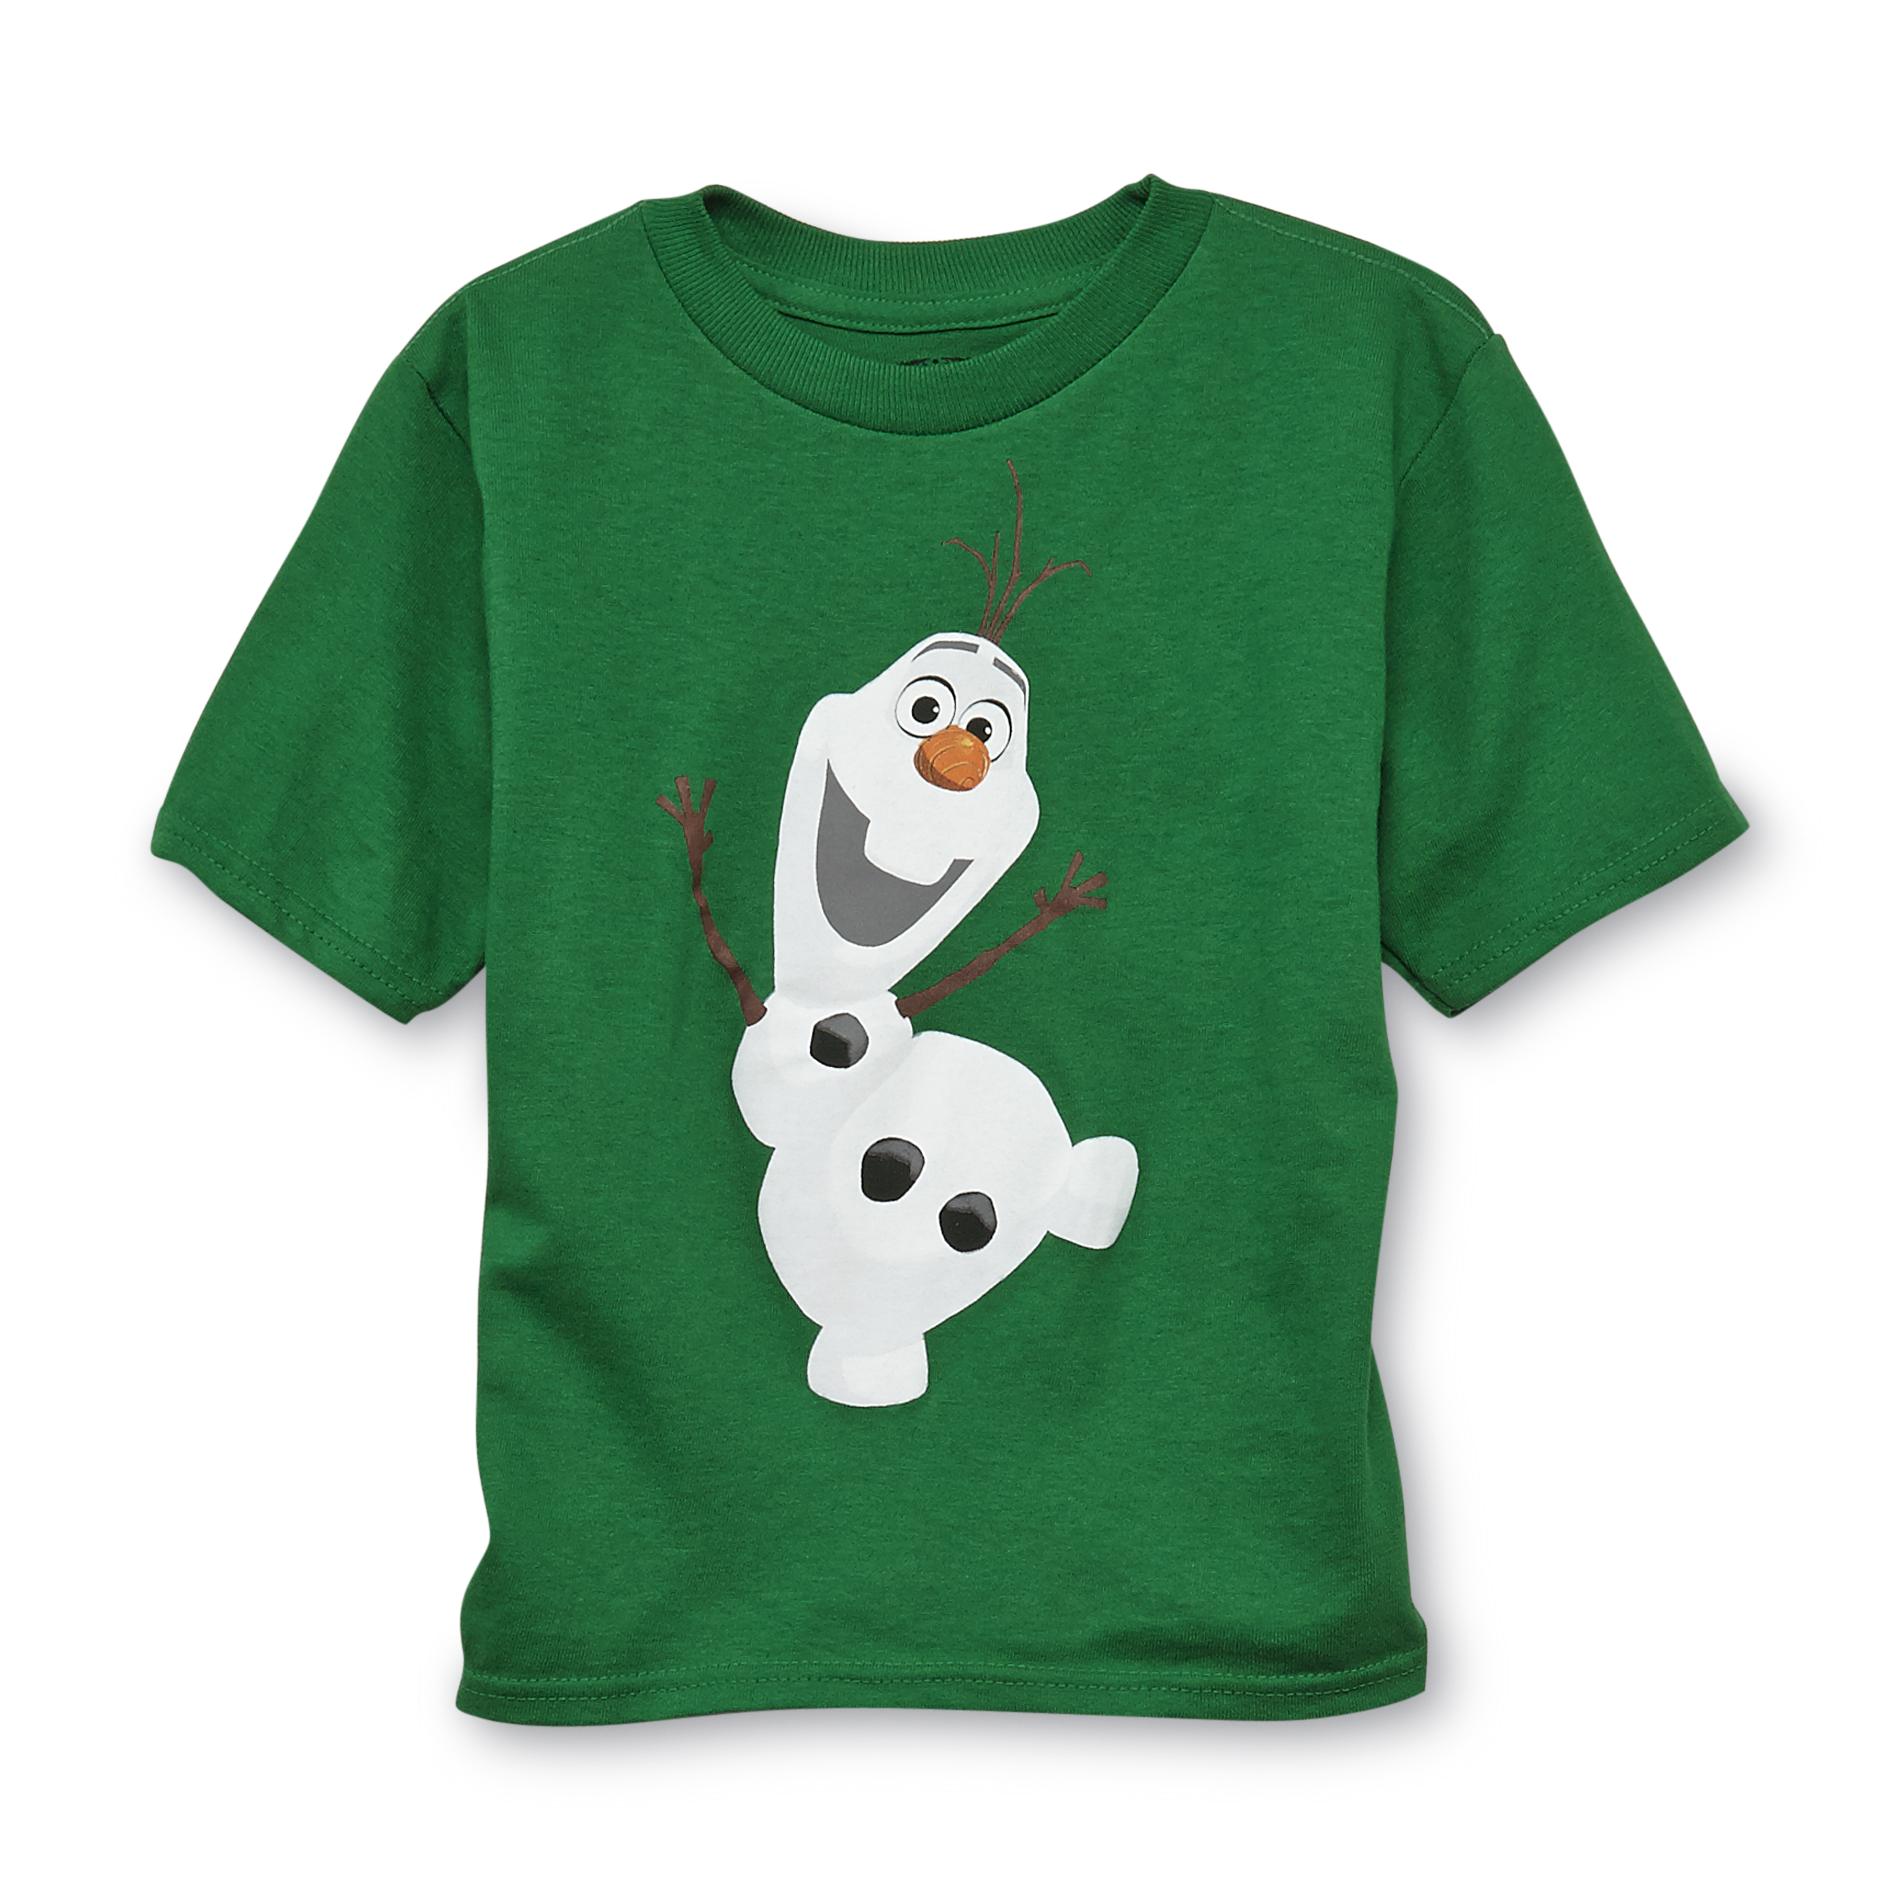 Disney Frozen Boy's Graphic T-Shirt - Olaf